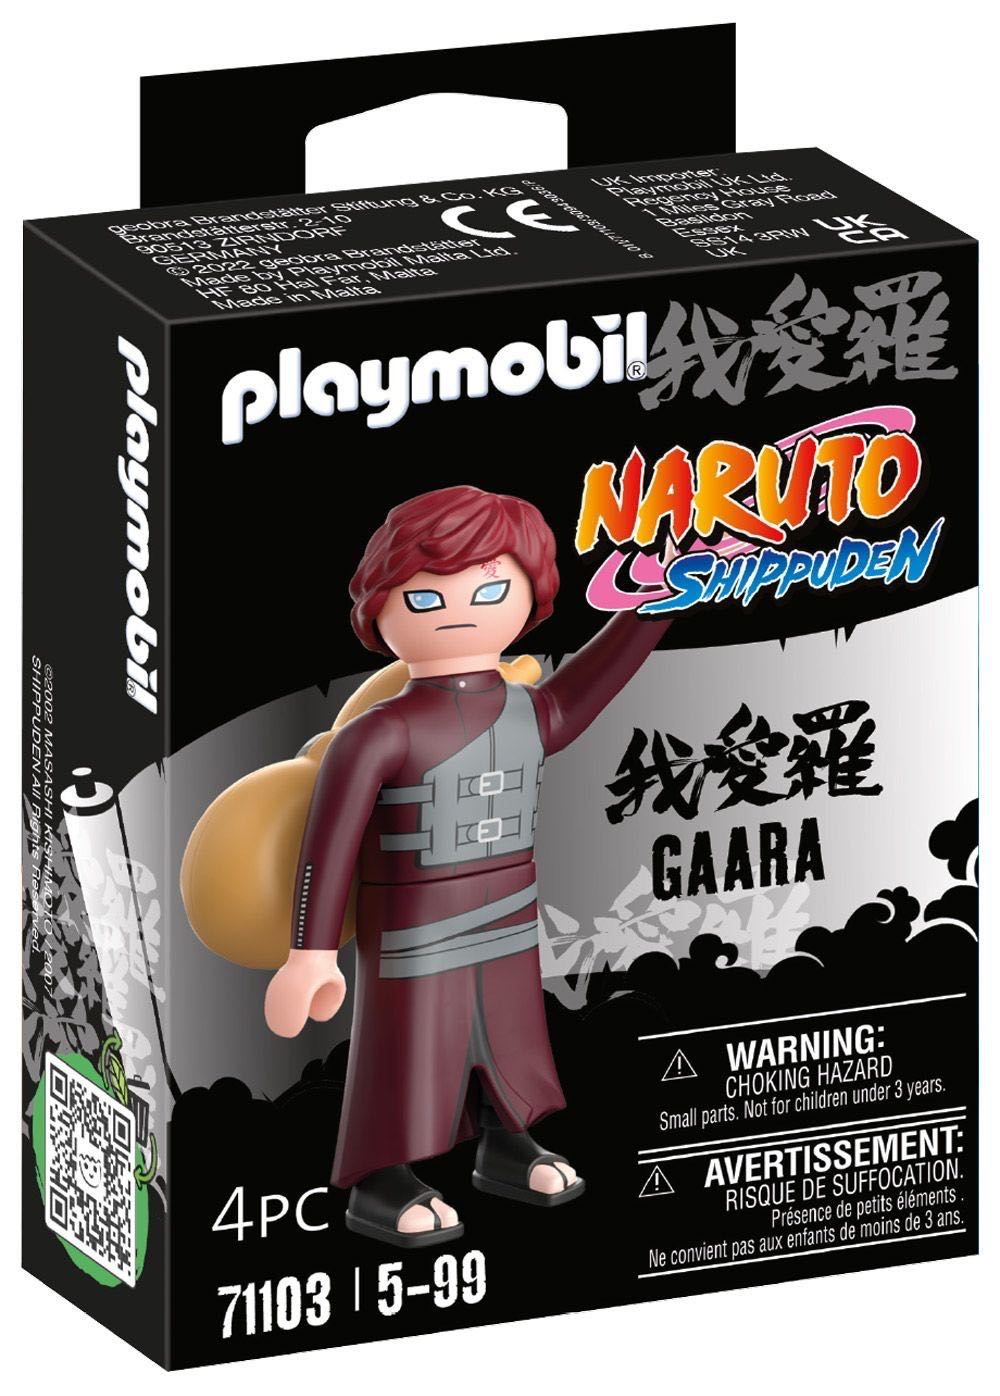 Gaara - Playmobil (Naruto Shippuden) action figure collectible [Barcode 4008789711038] - Main Image 1